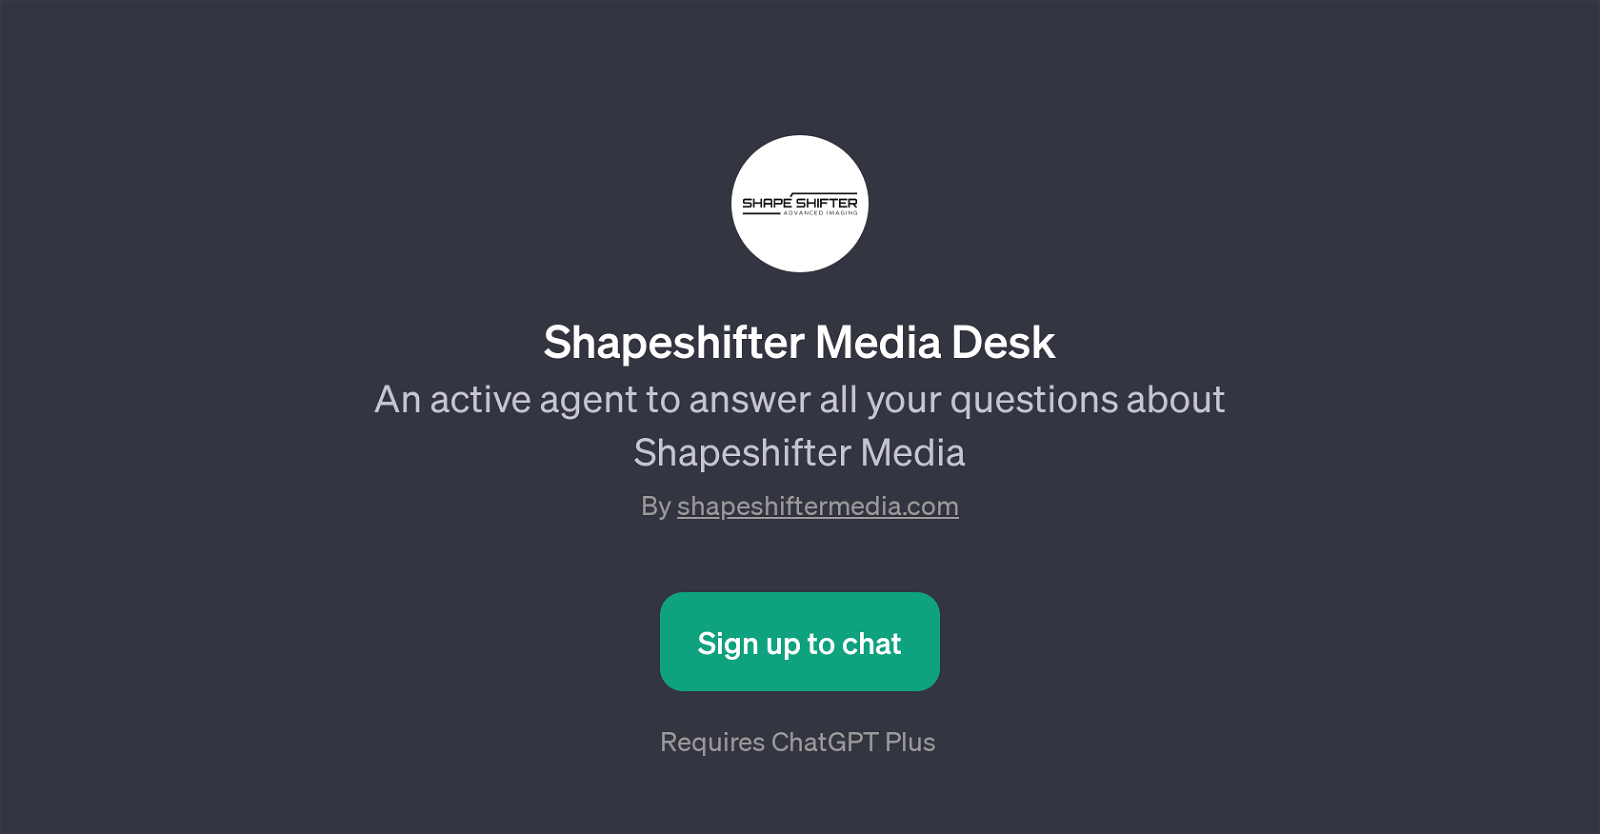 Shapeshifter Media Desk website